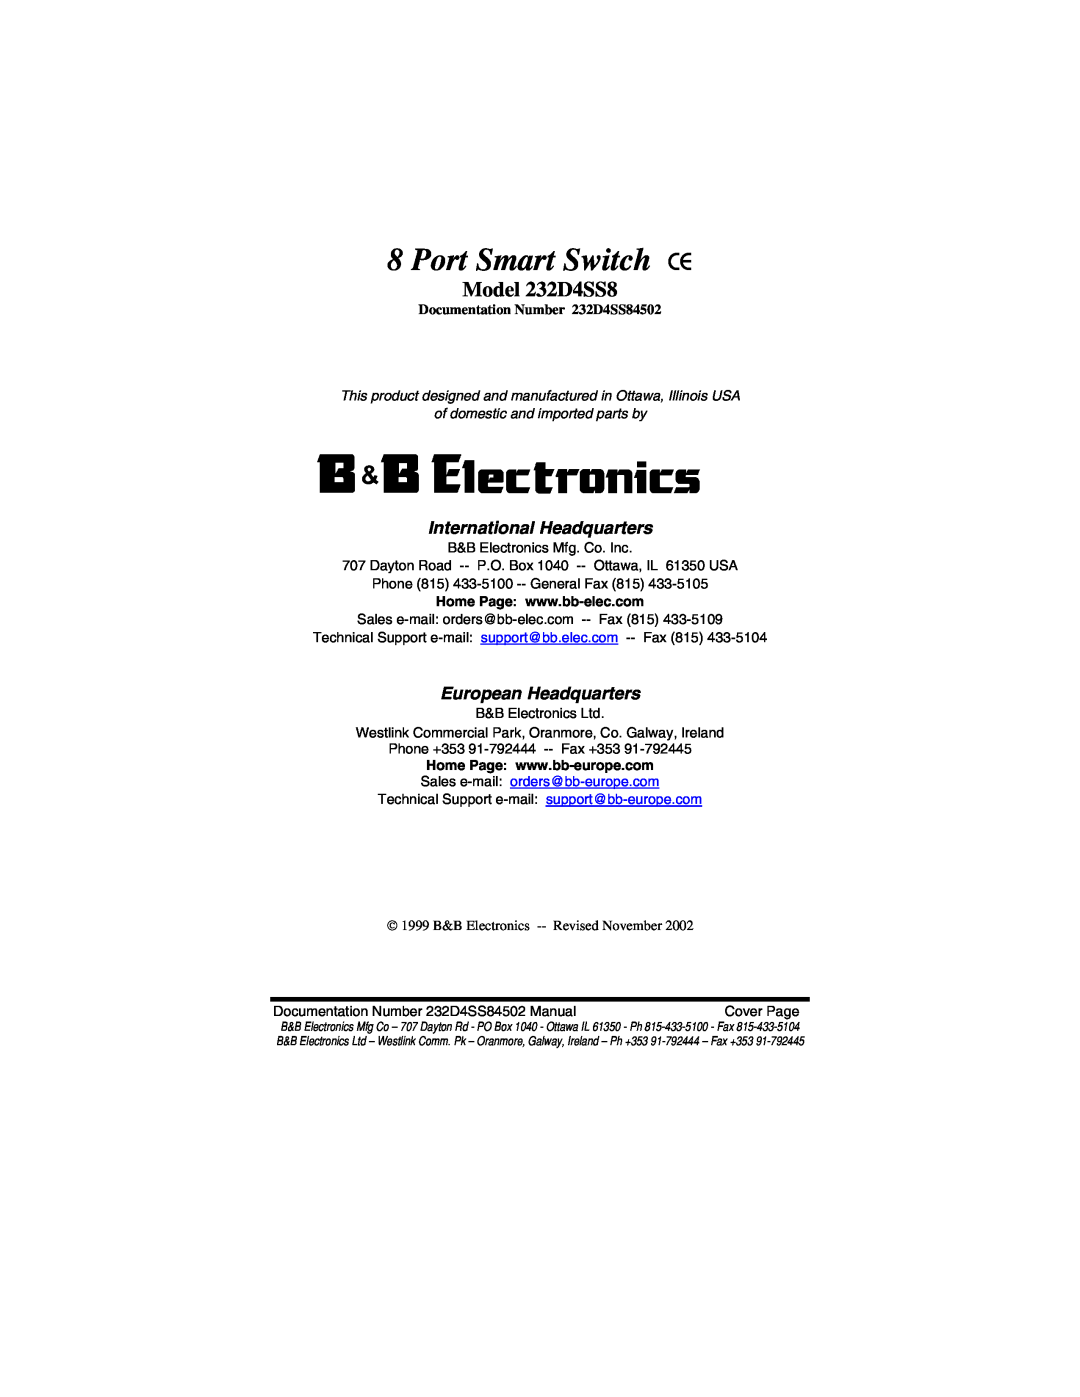 B&B Electronics manual Port Smart Switch CE, Model 232D4SS8, International Headquarters, European Headquarters 